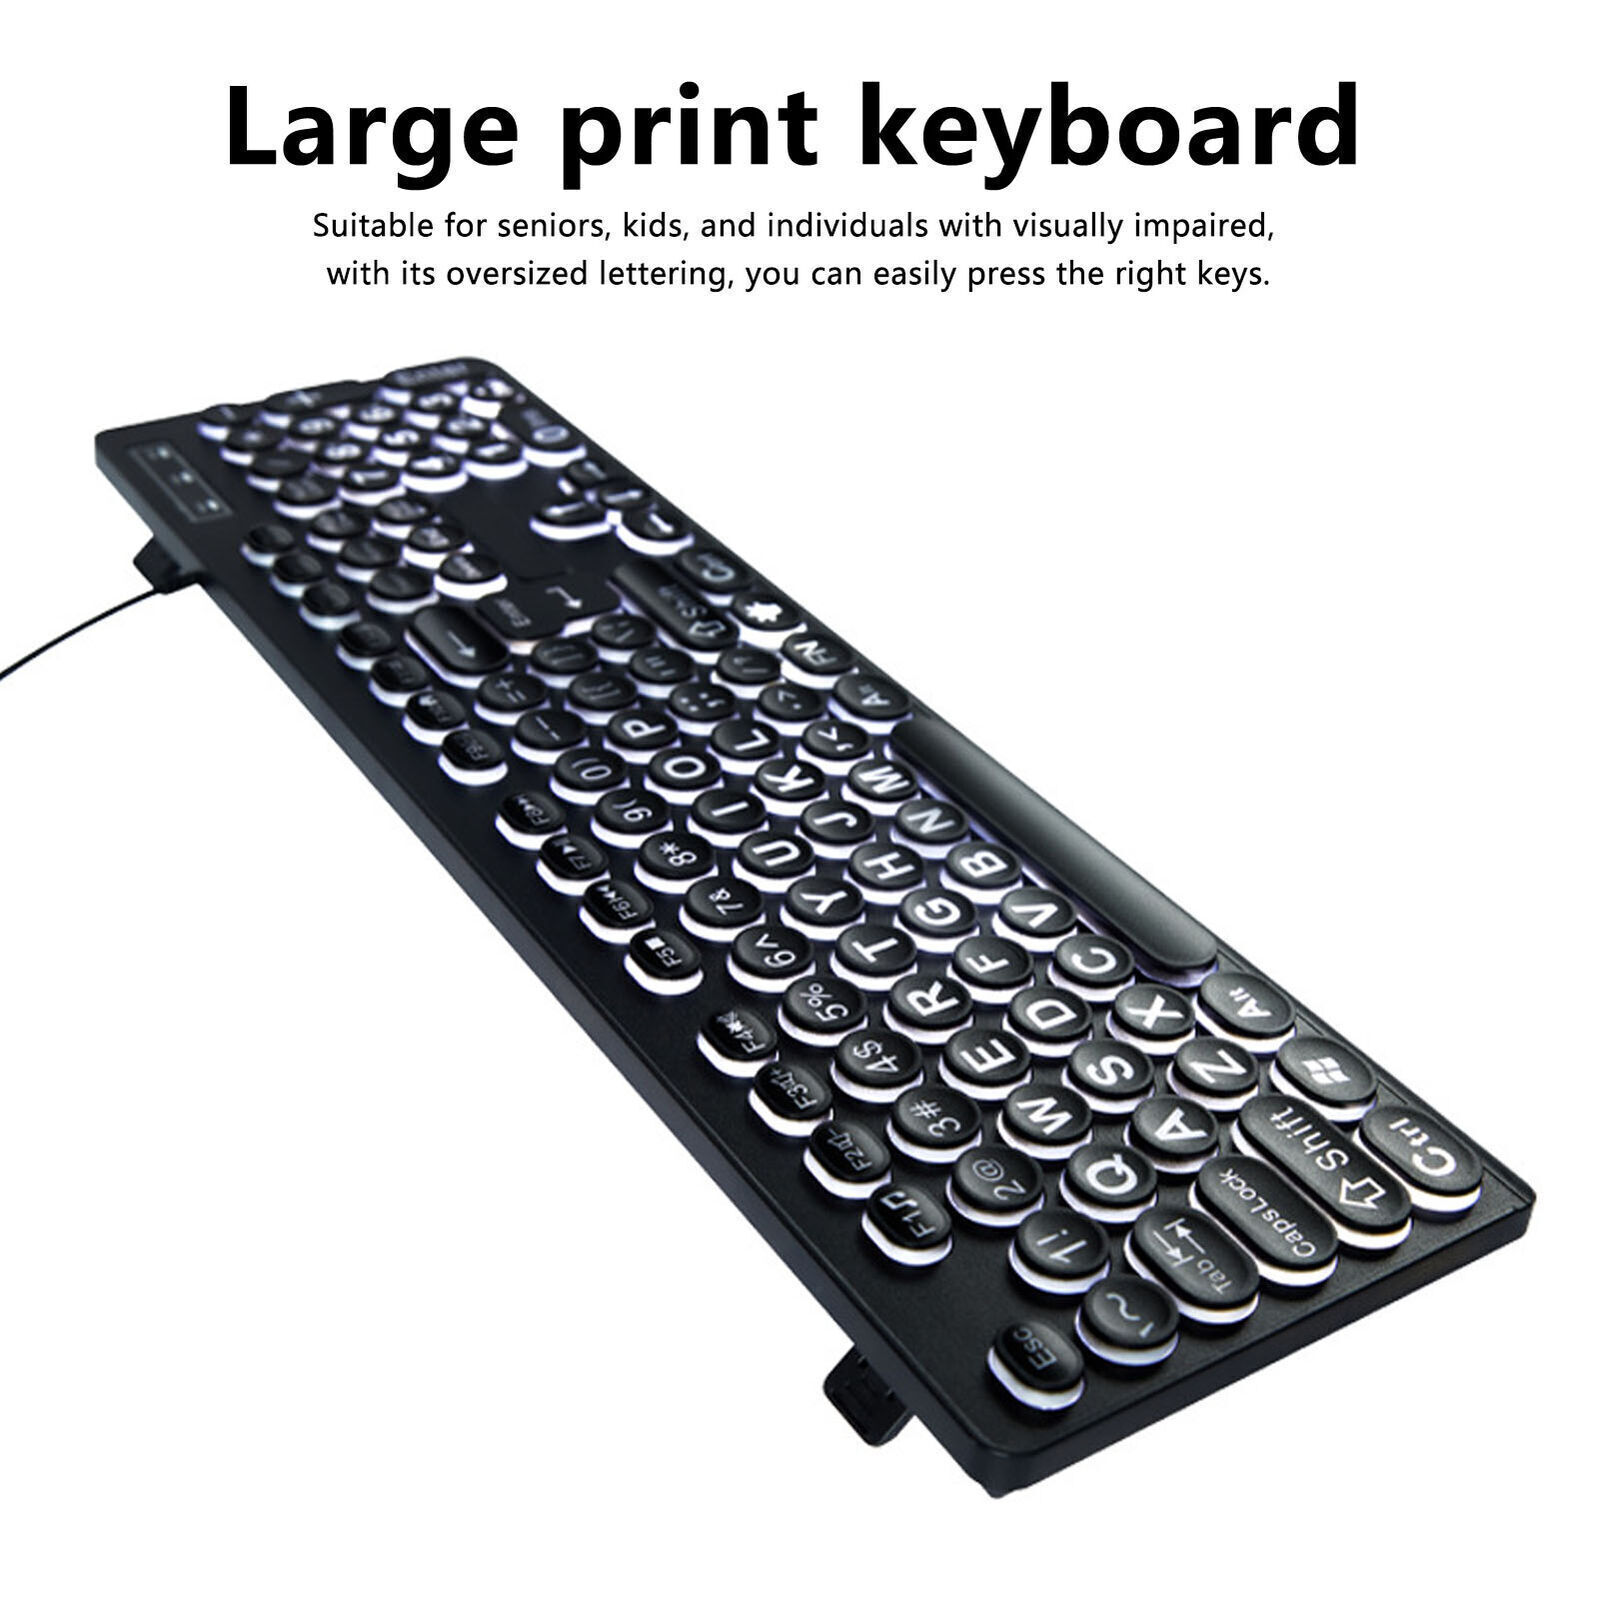 104 Key Wired Keyboard Backlit Large Print Keyboard Business Standard Keyboard